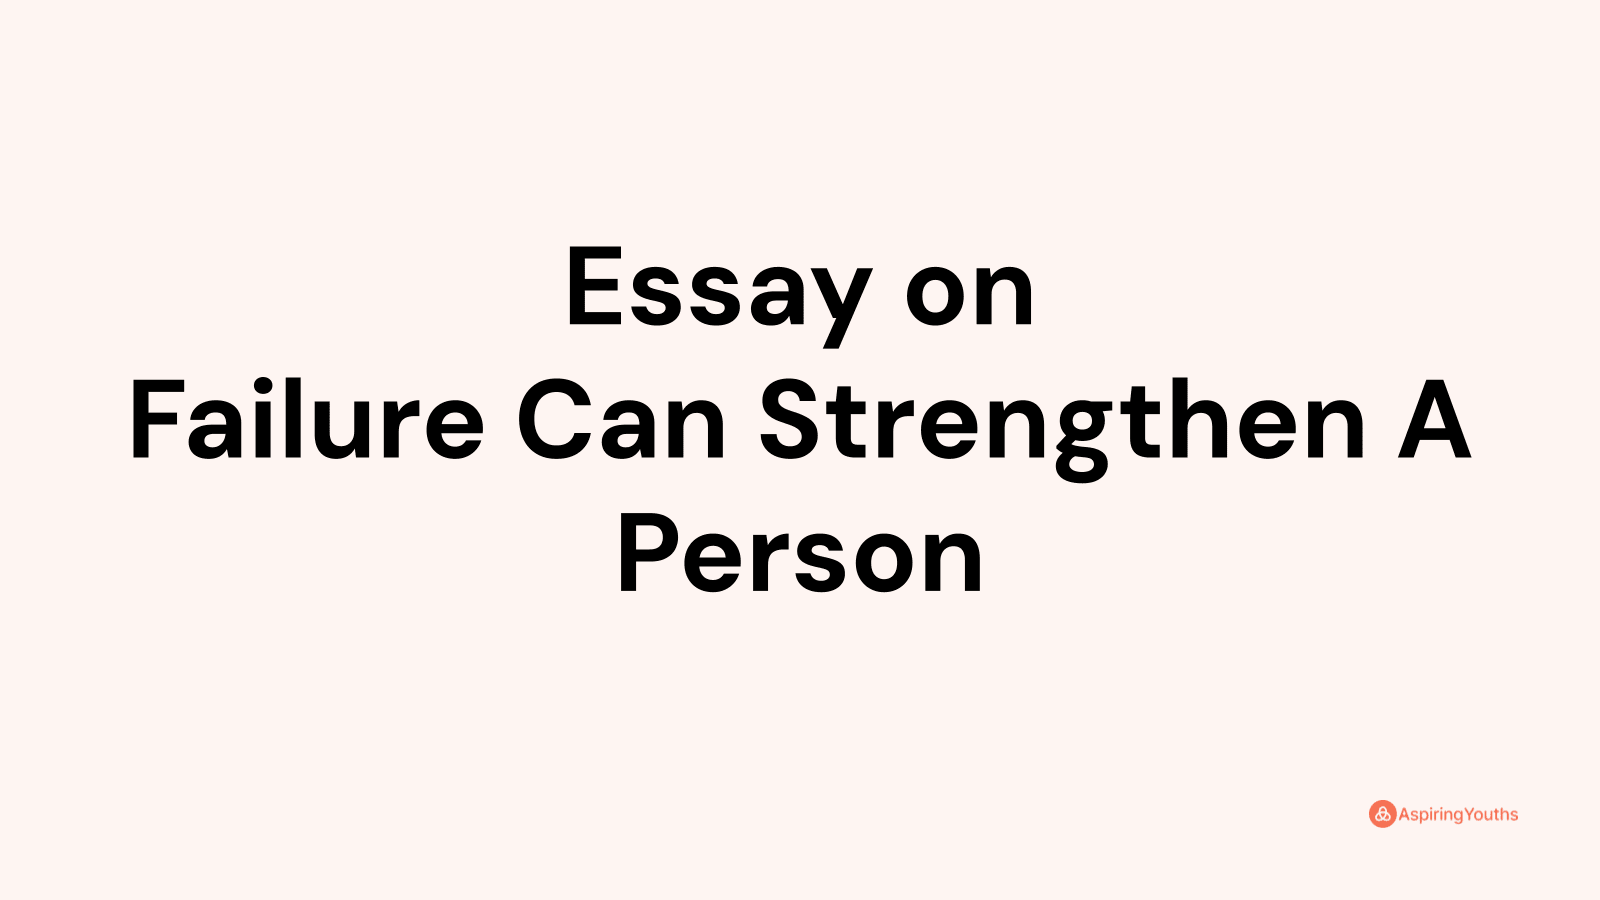 write an essay explaining how failure can strengthen a person